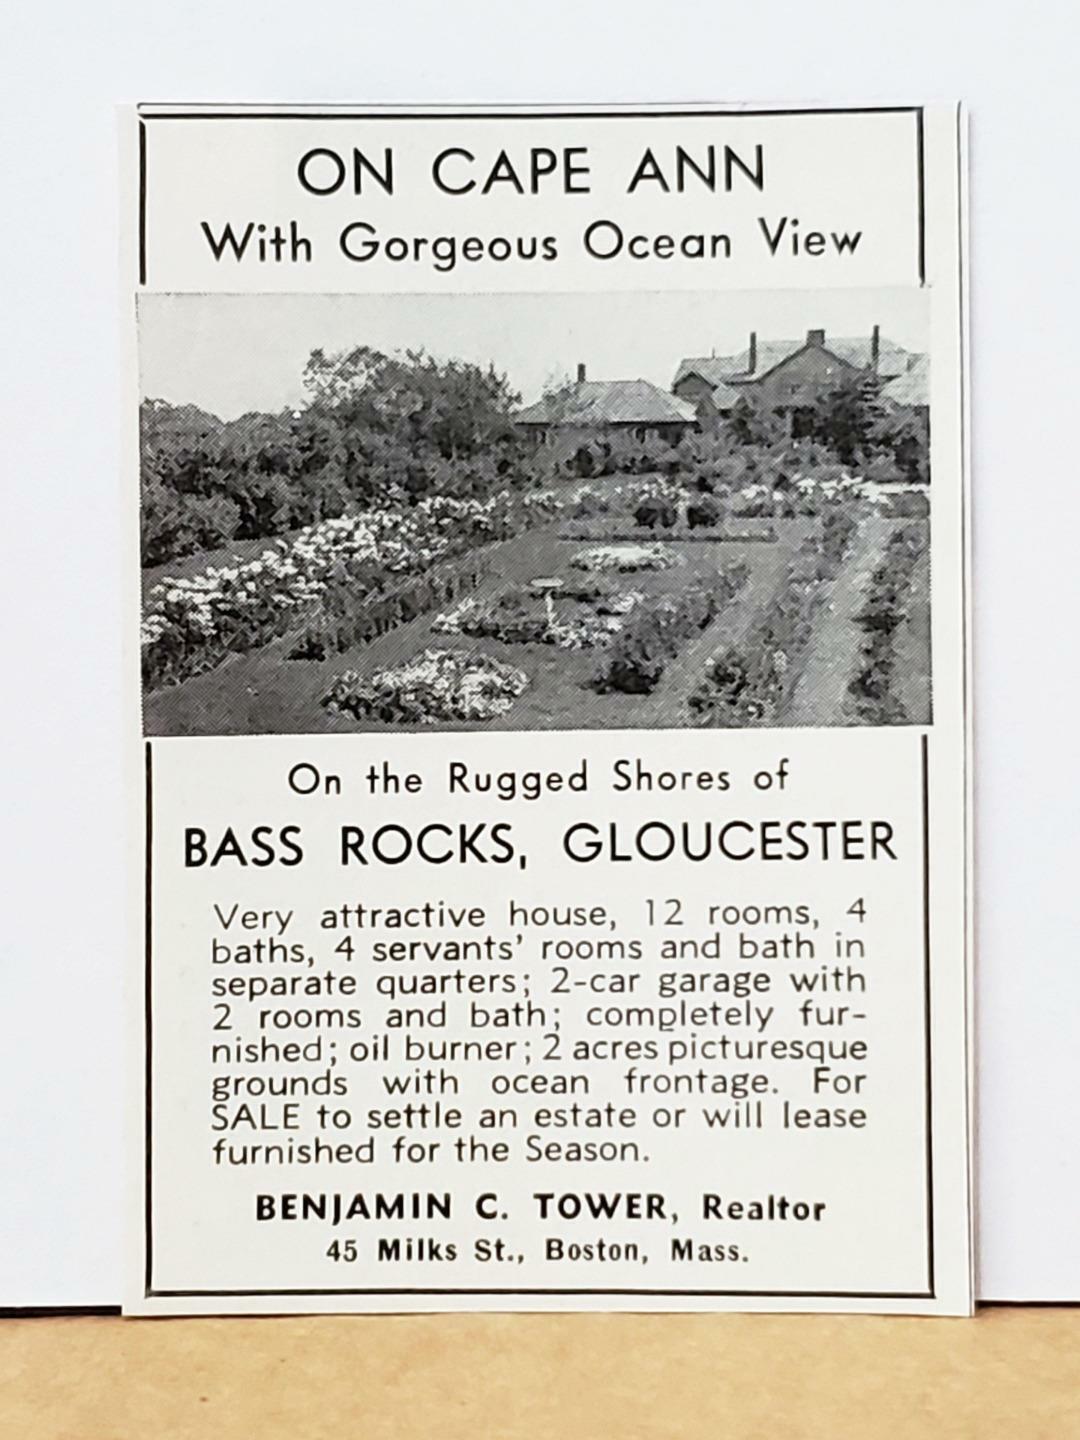 Cape Ann Bass Rocks Mass 1940 PRINT AD Photo Ocean View Benjamin Tower Realtor